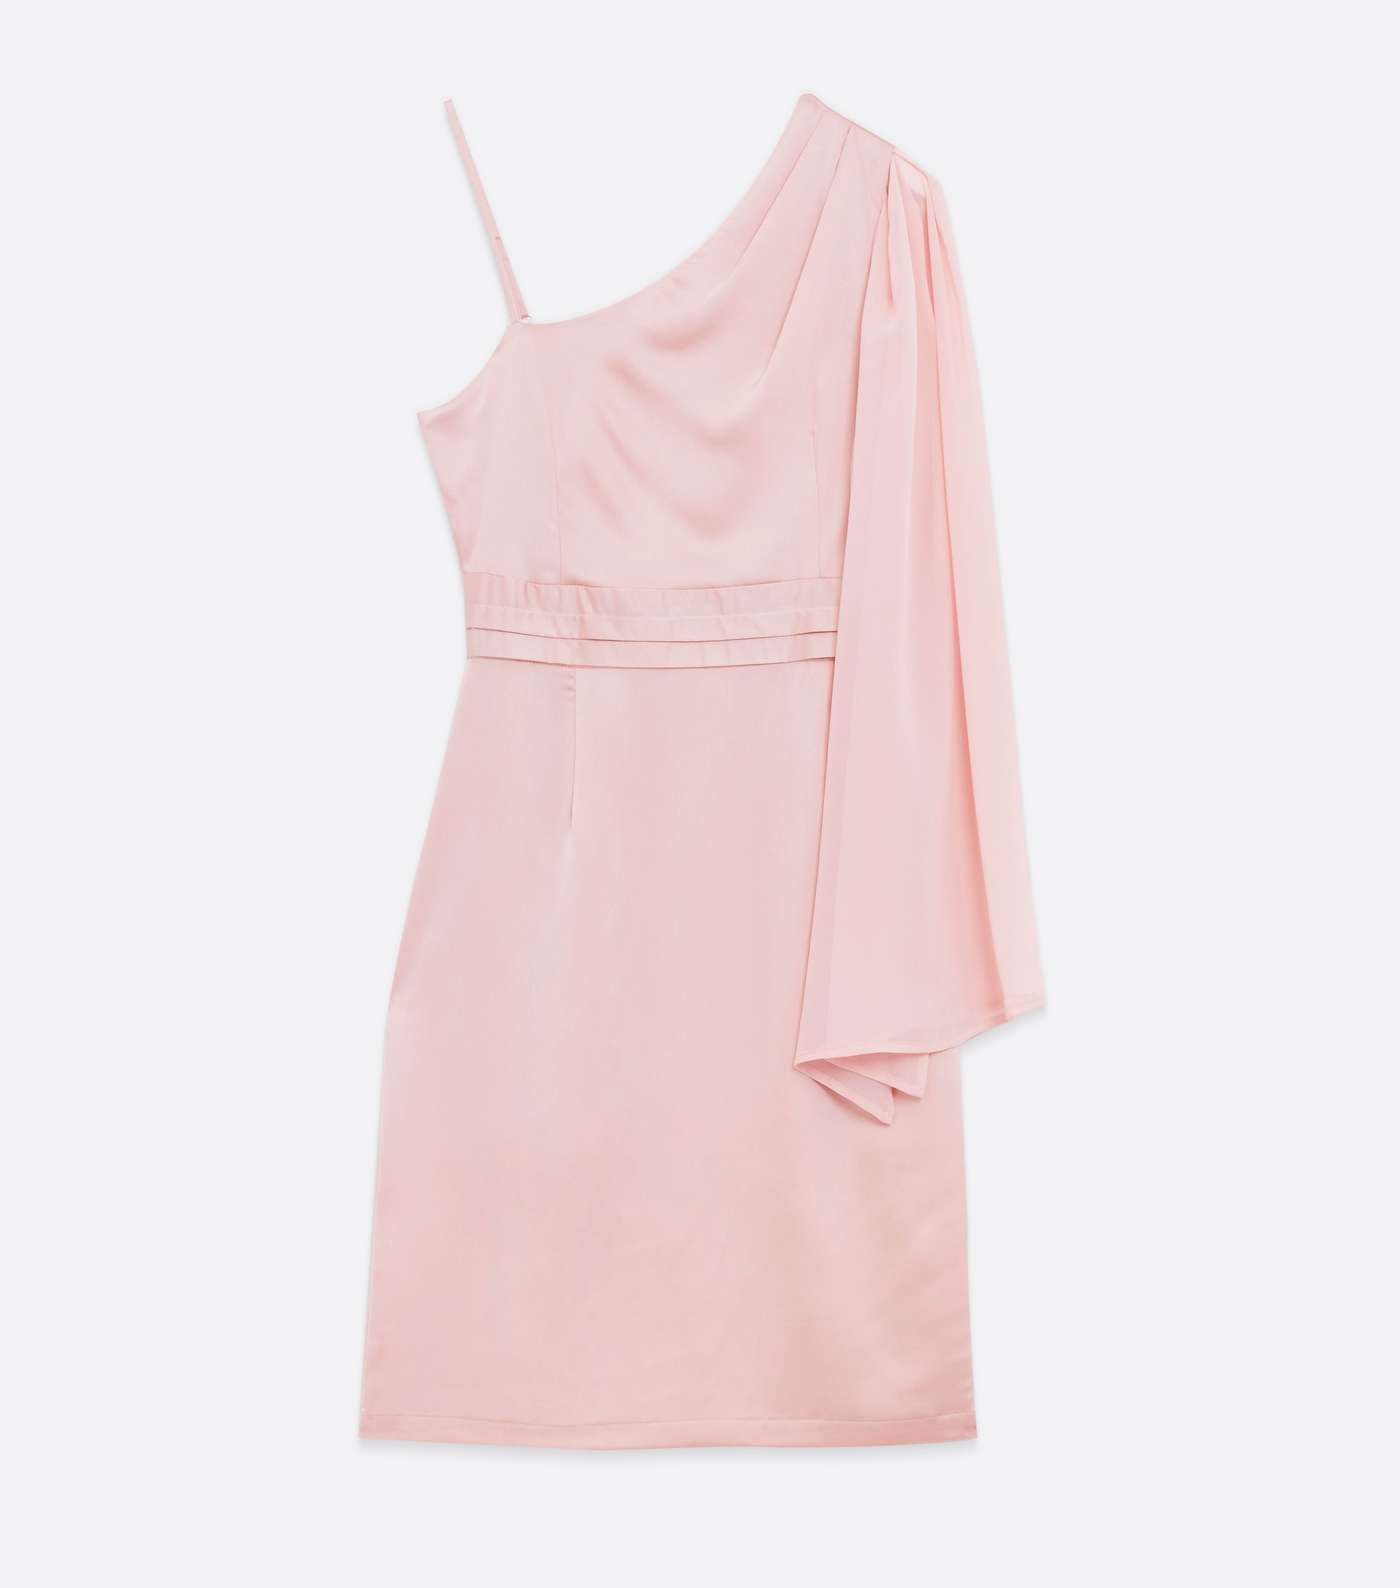 Zibi London Pink Satin One Shoulder Mini Dress Image 5